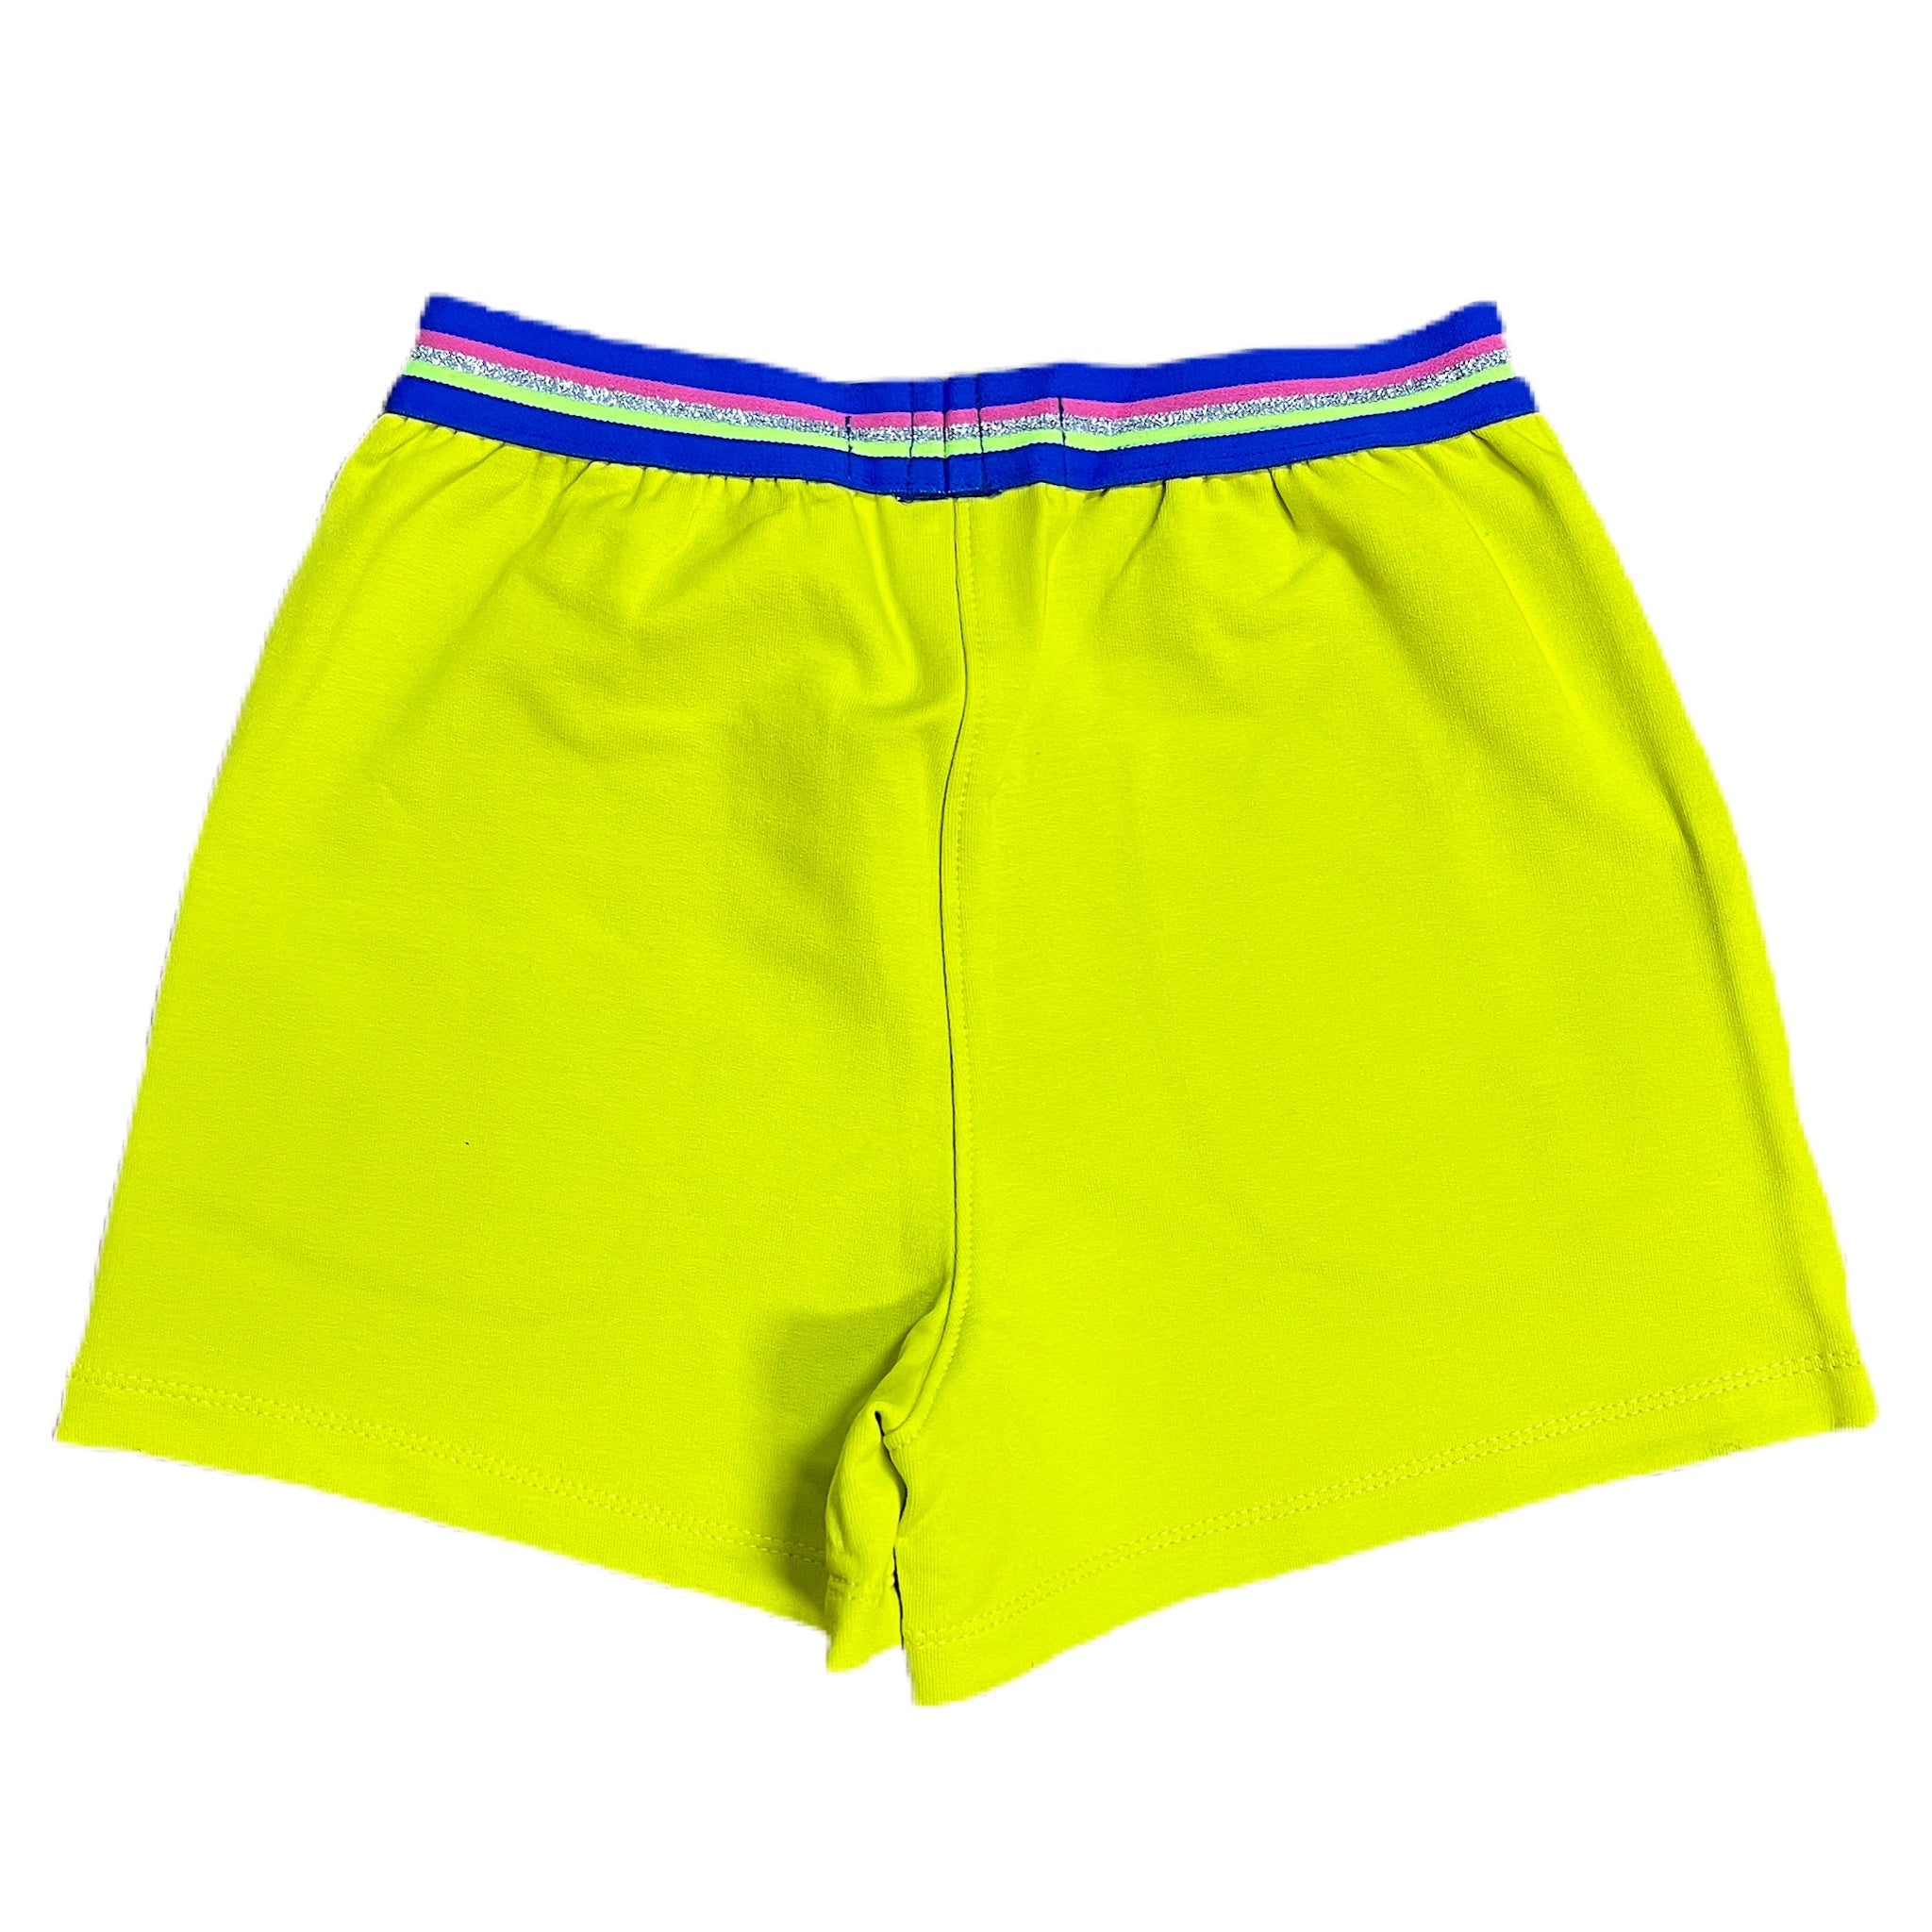 Contrast Waist Band Neon Yellow Shorts